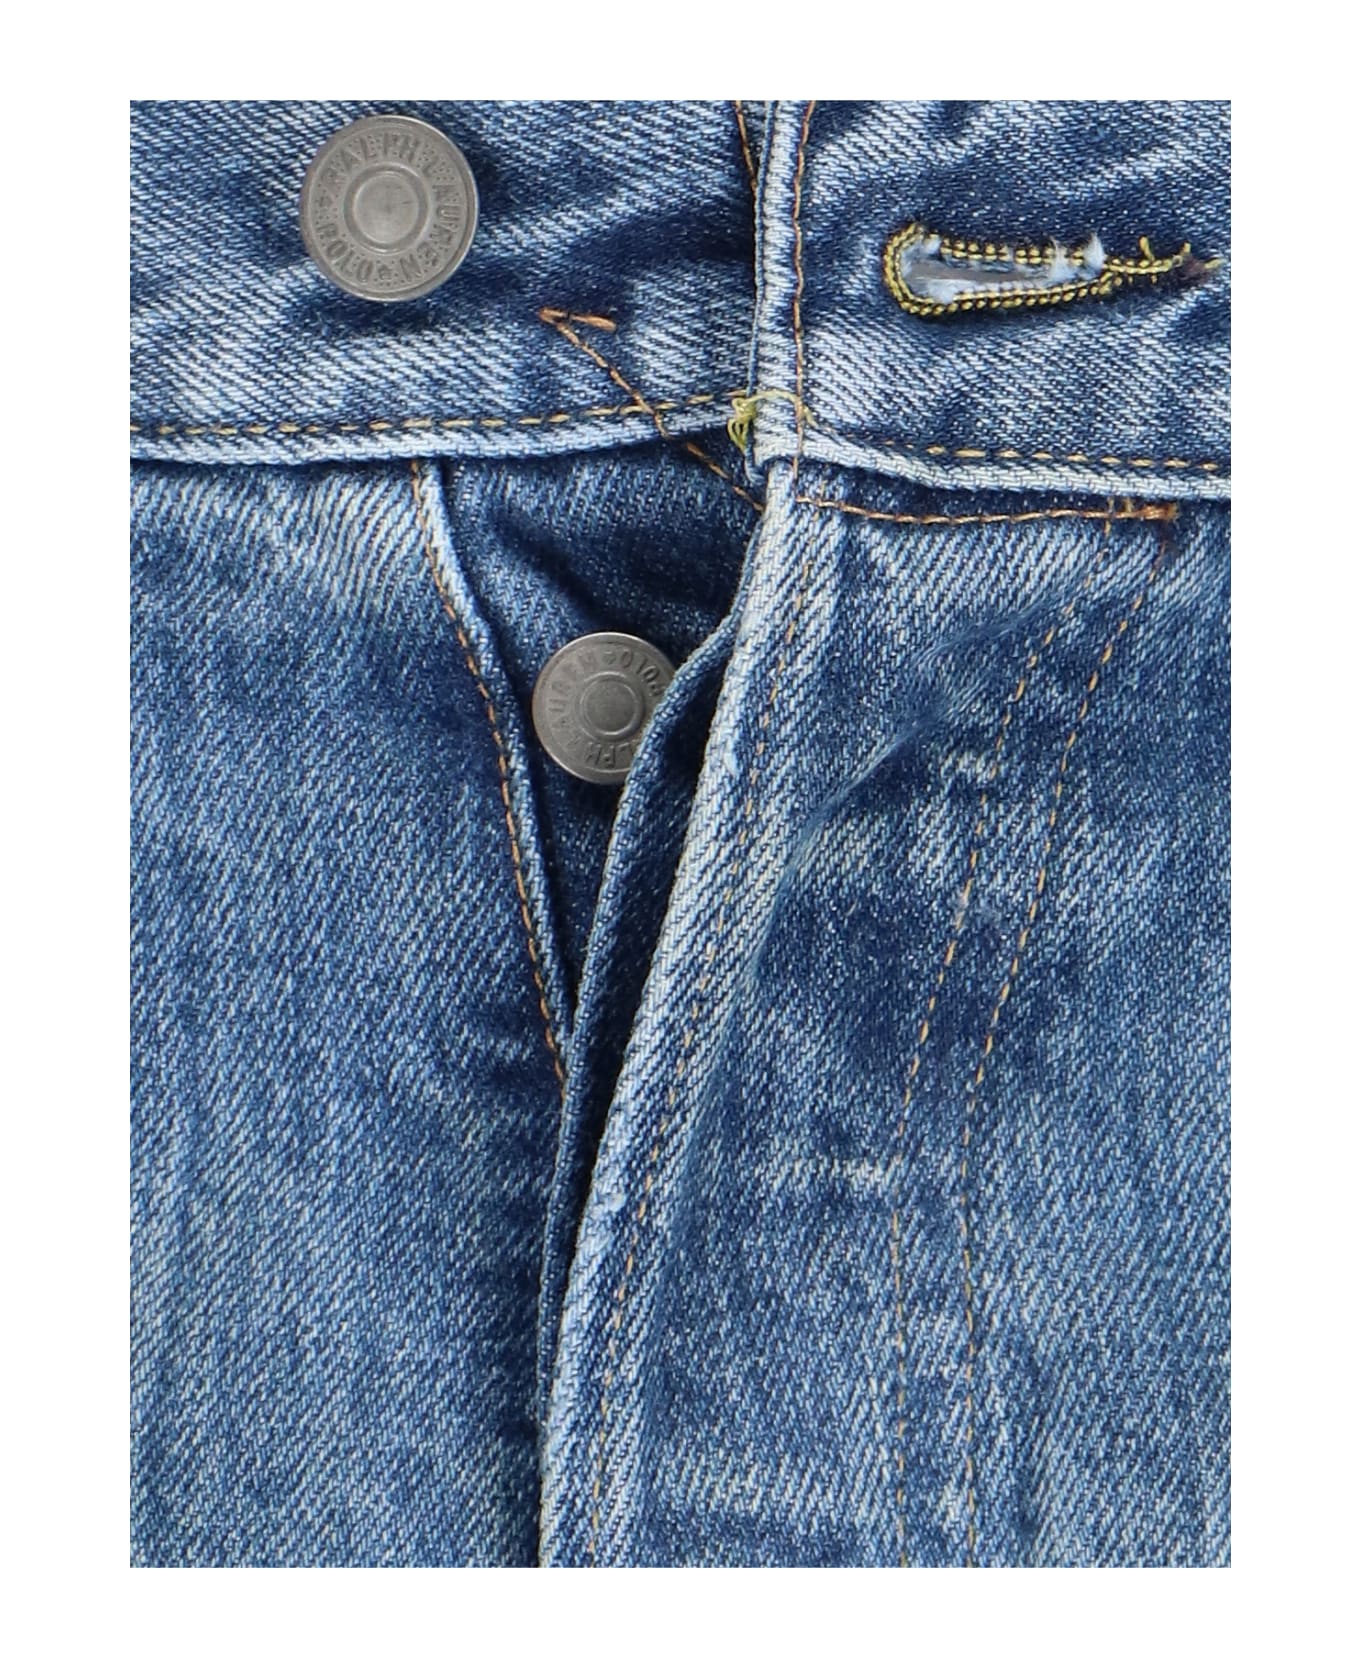 Polo Ralph Lauren Destroyed Details Jeans - Light Blue デニム